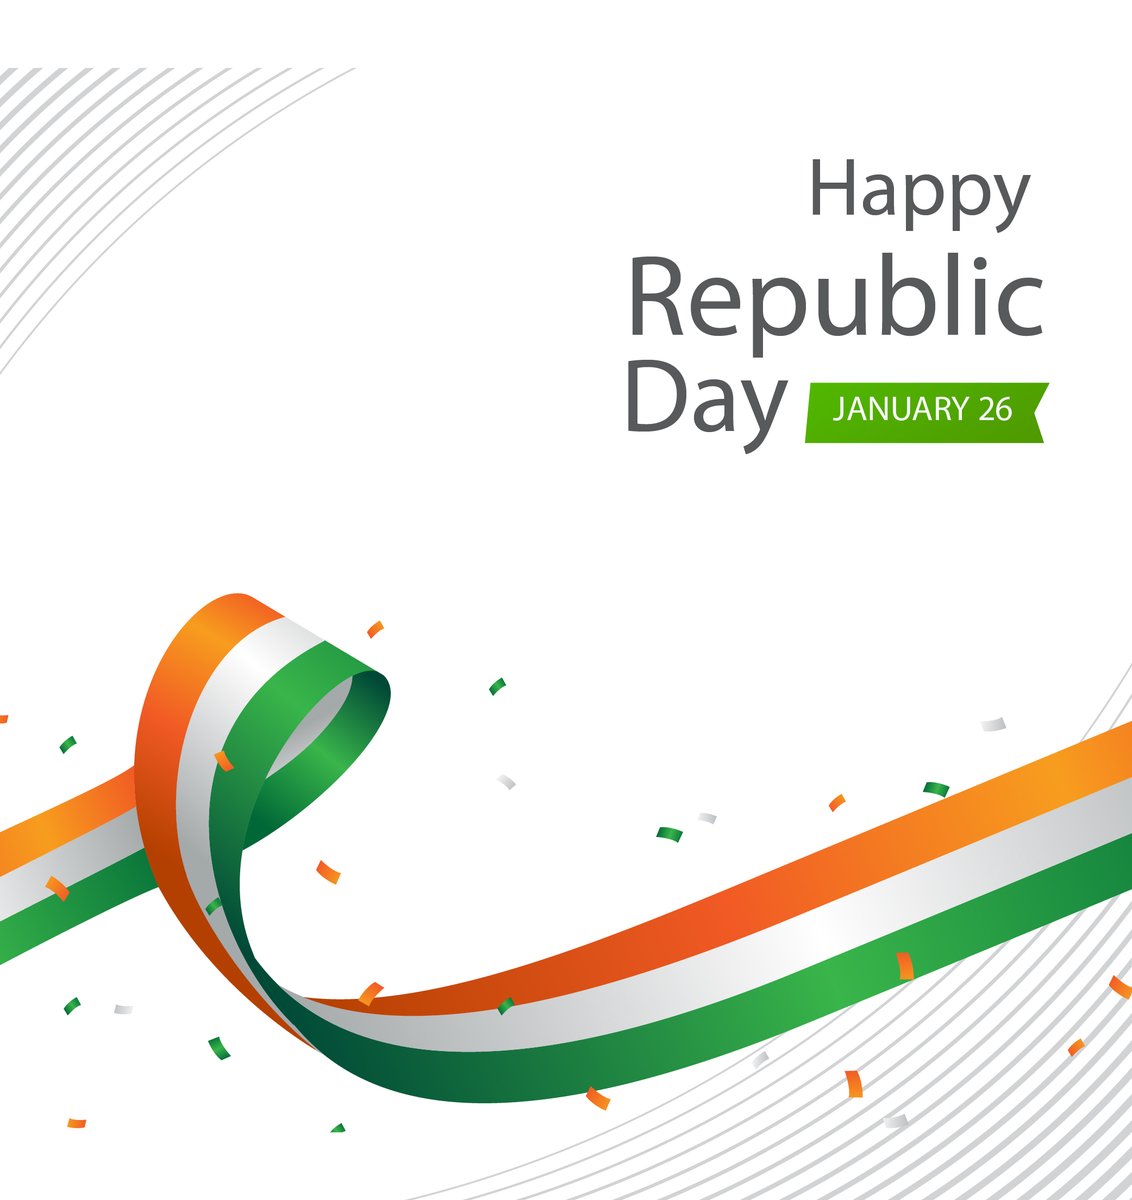 Wishing you all Happy Republic Day.